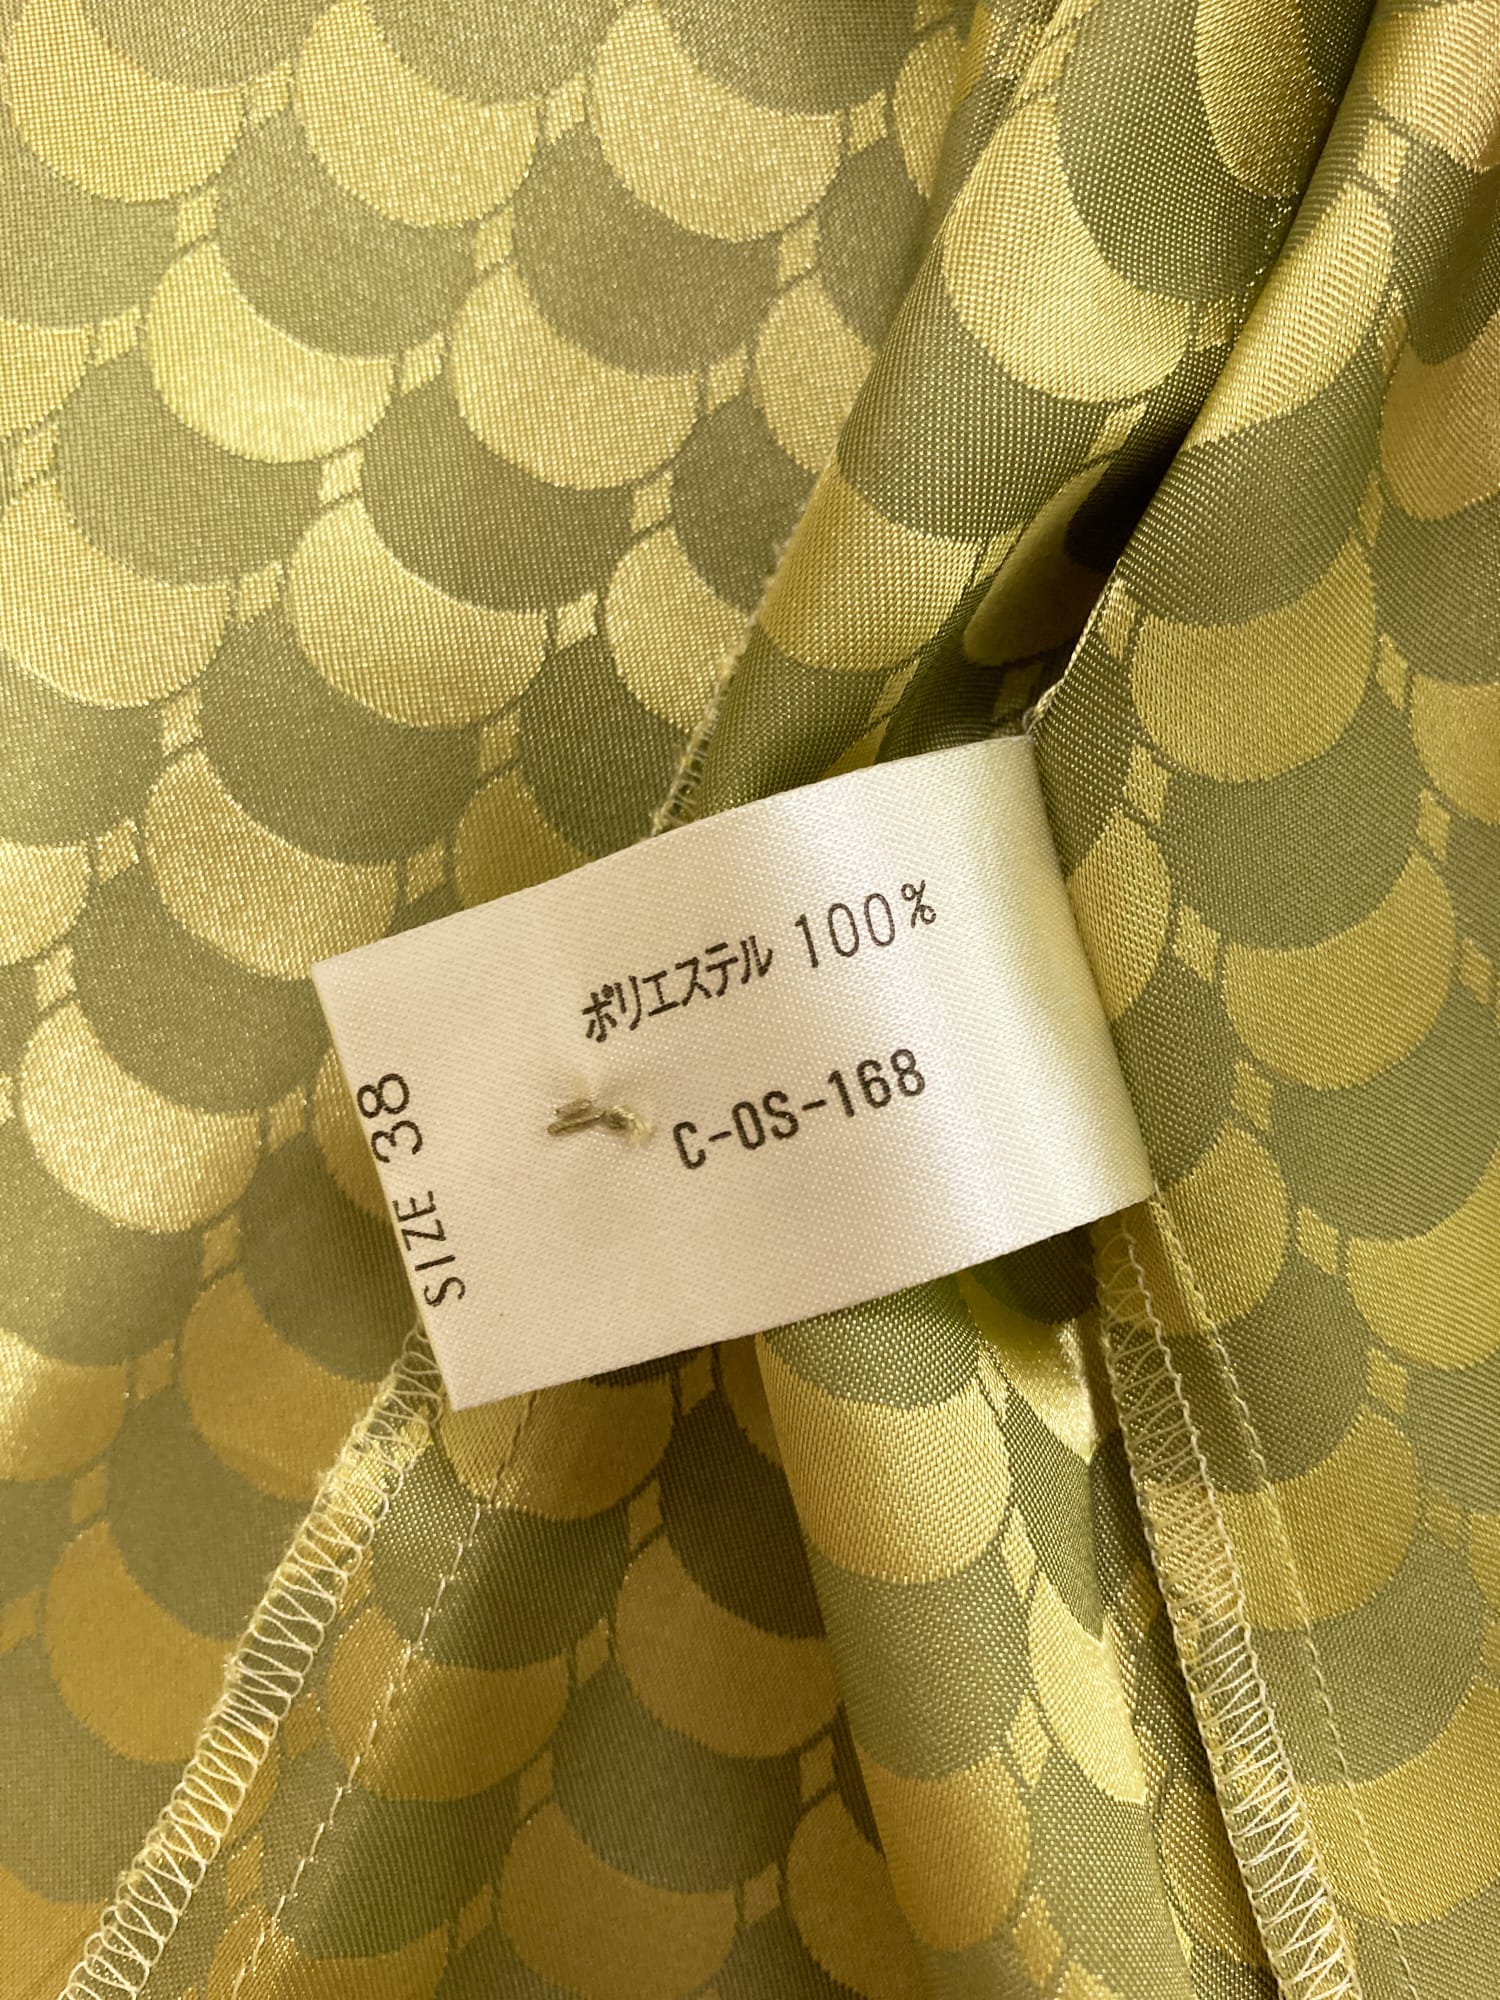 Christian Aujard shiny green polyester scale pattern shirt - size 38